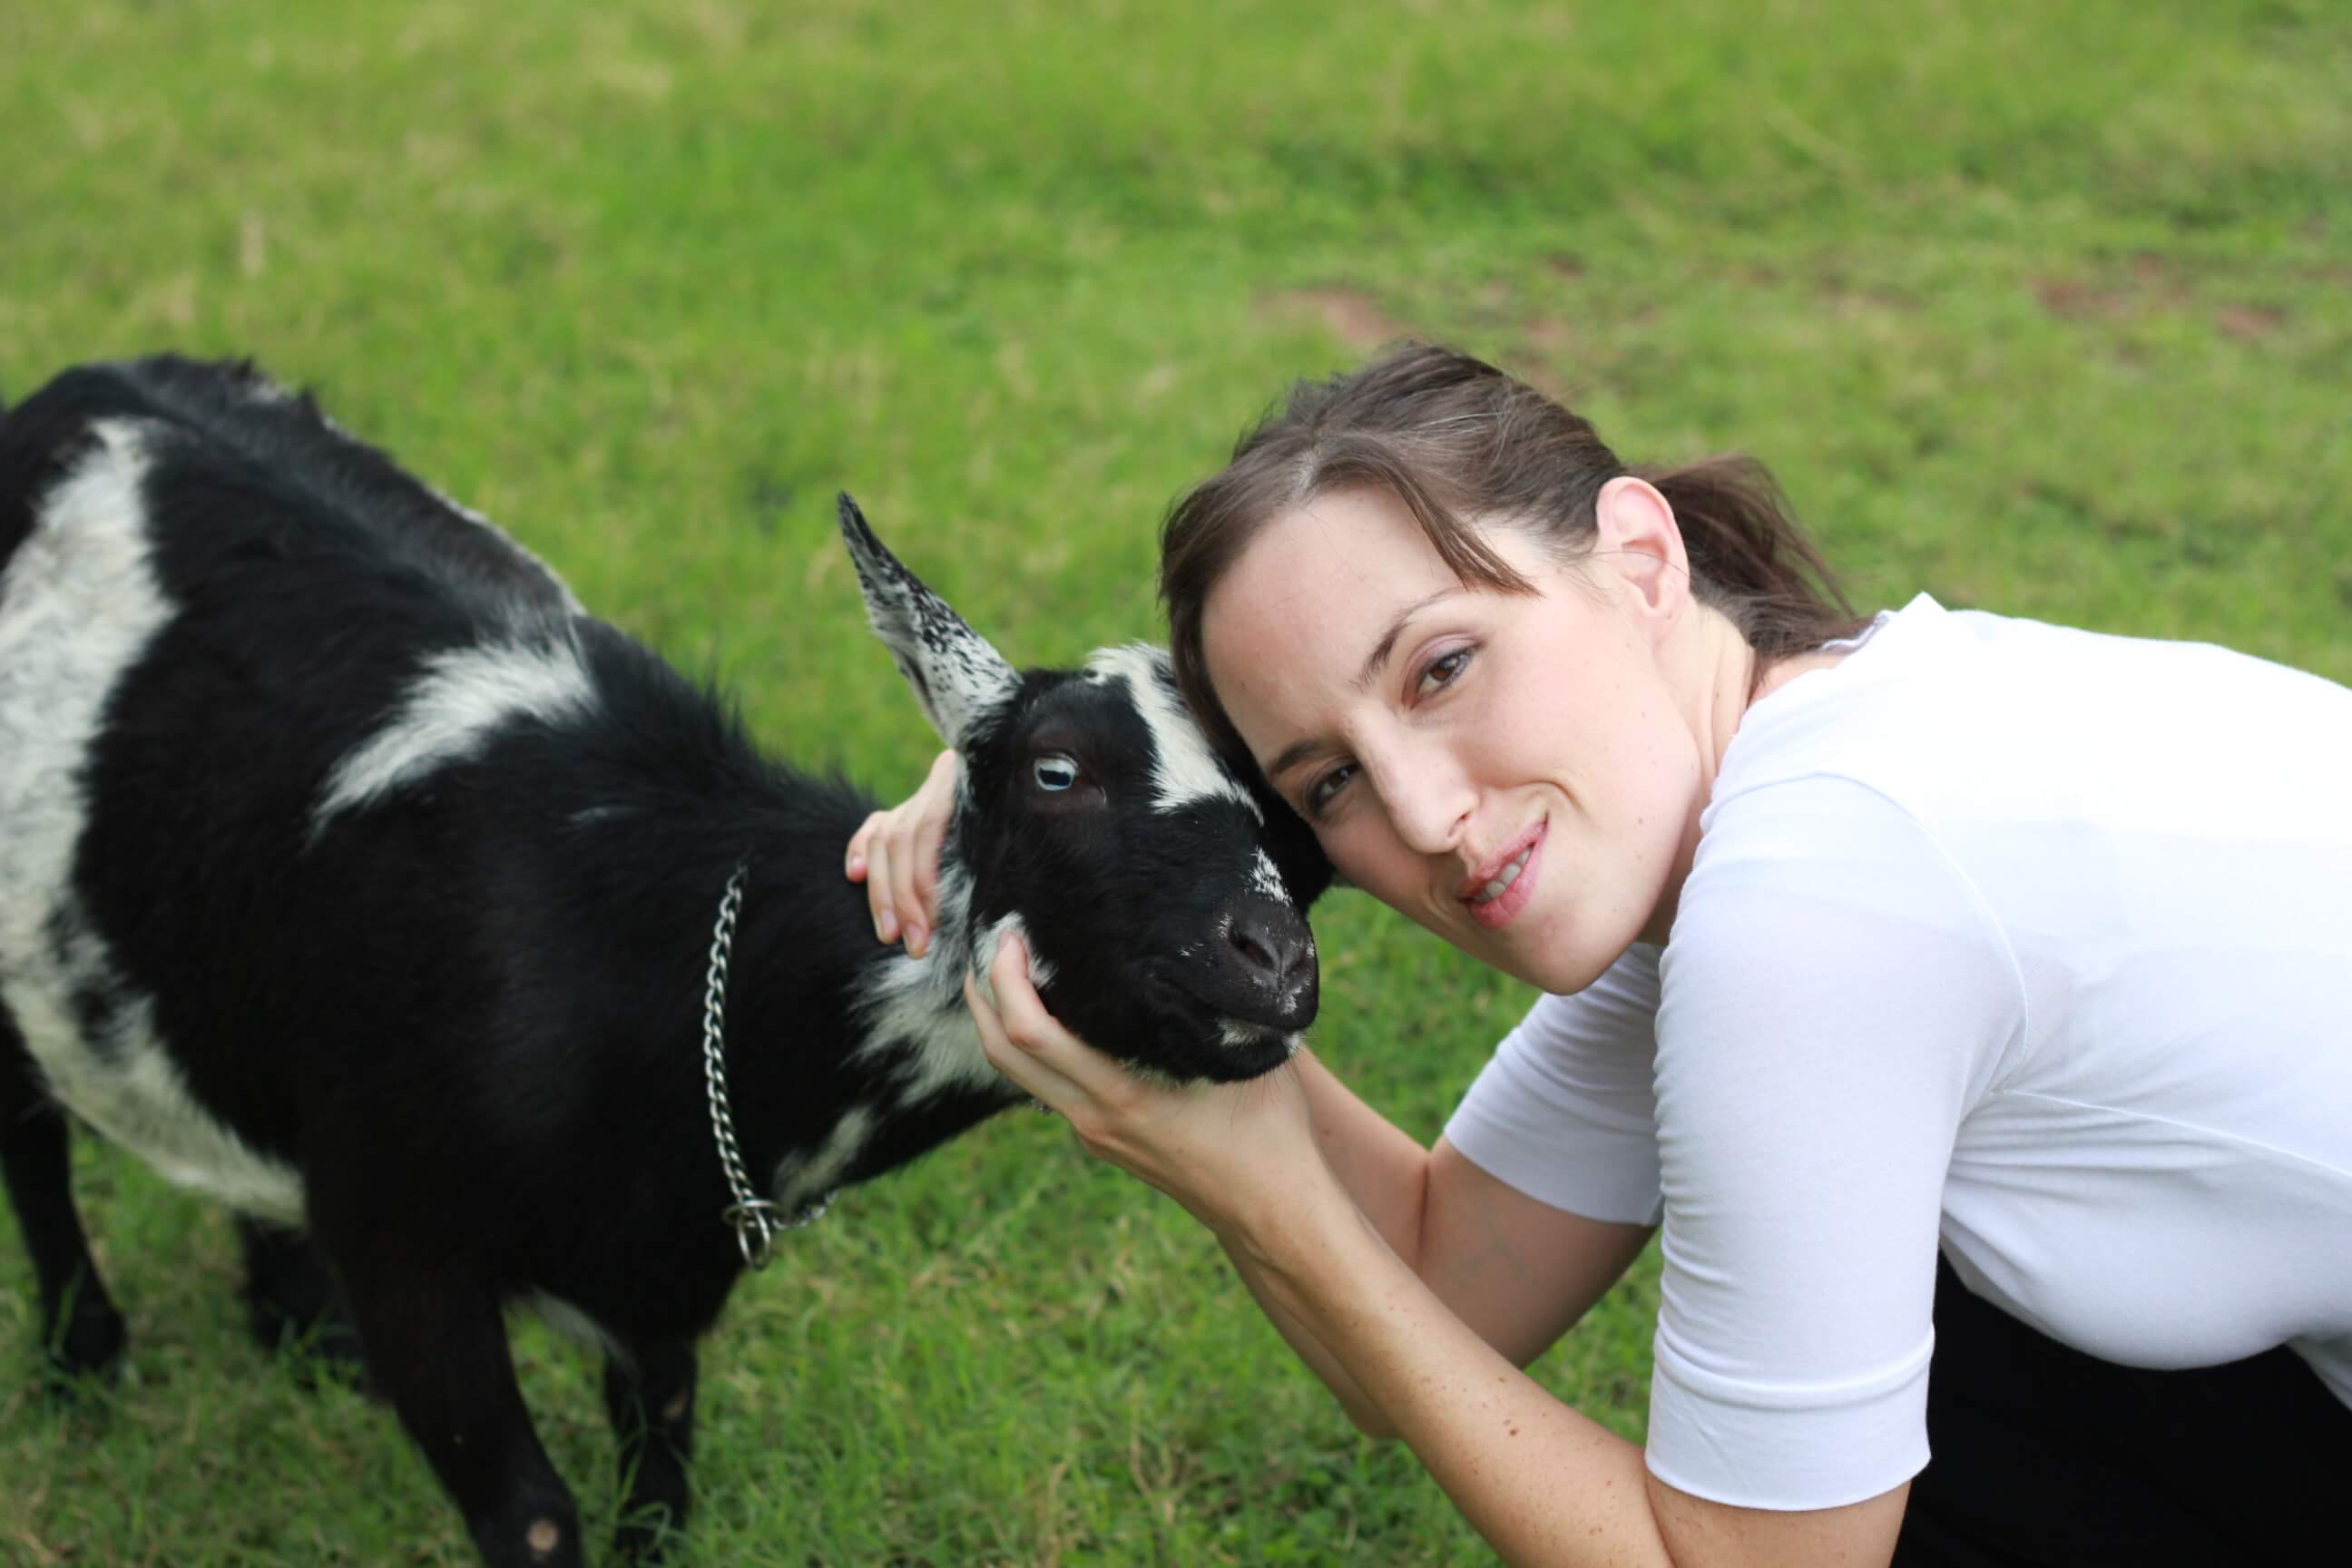 DaNelle cuddling a black and white goat kid